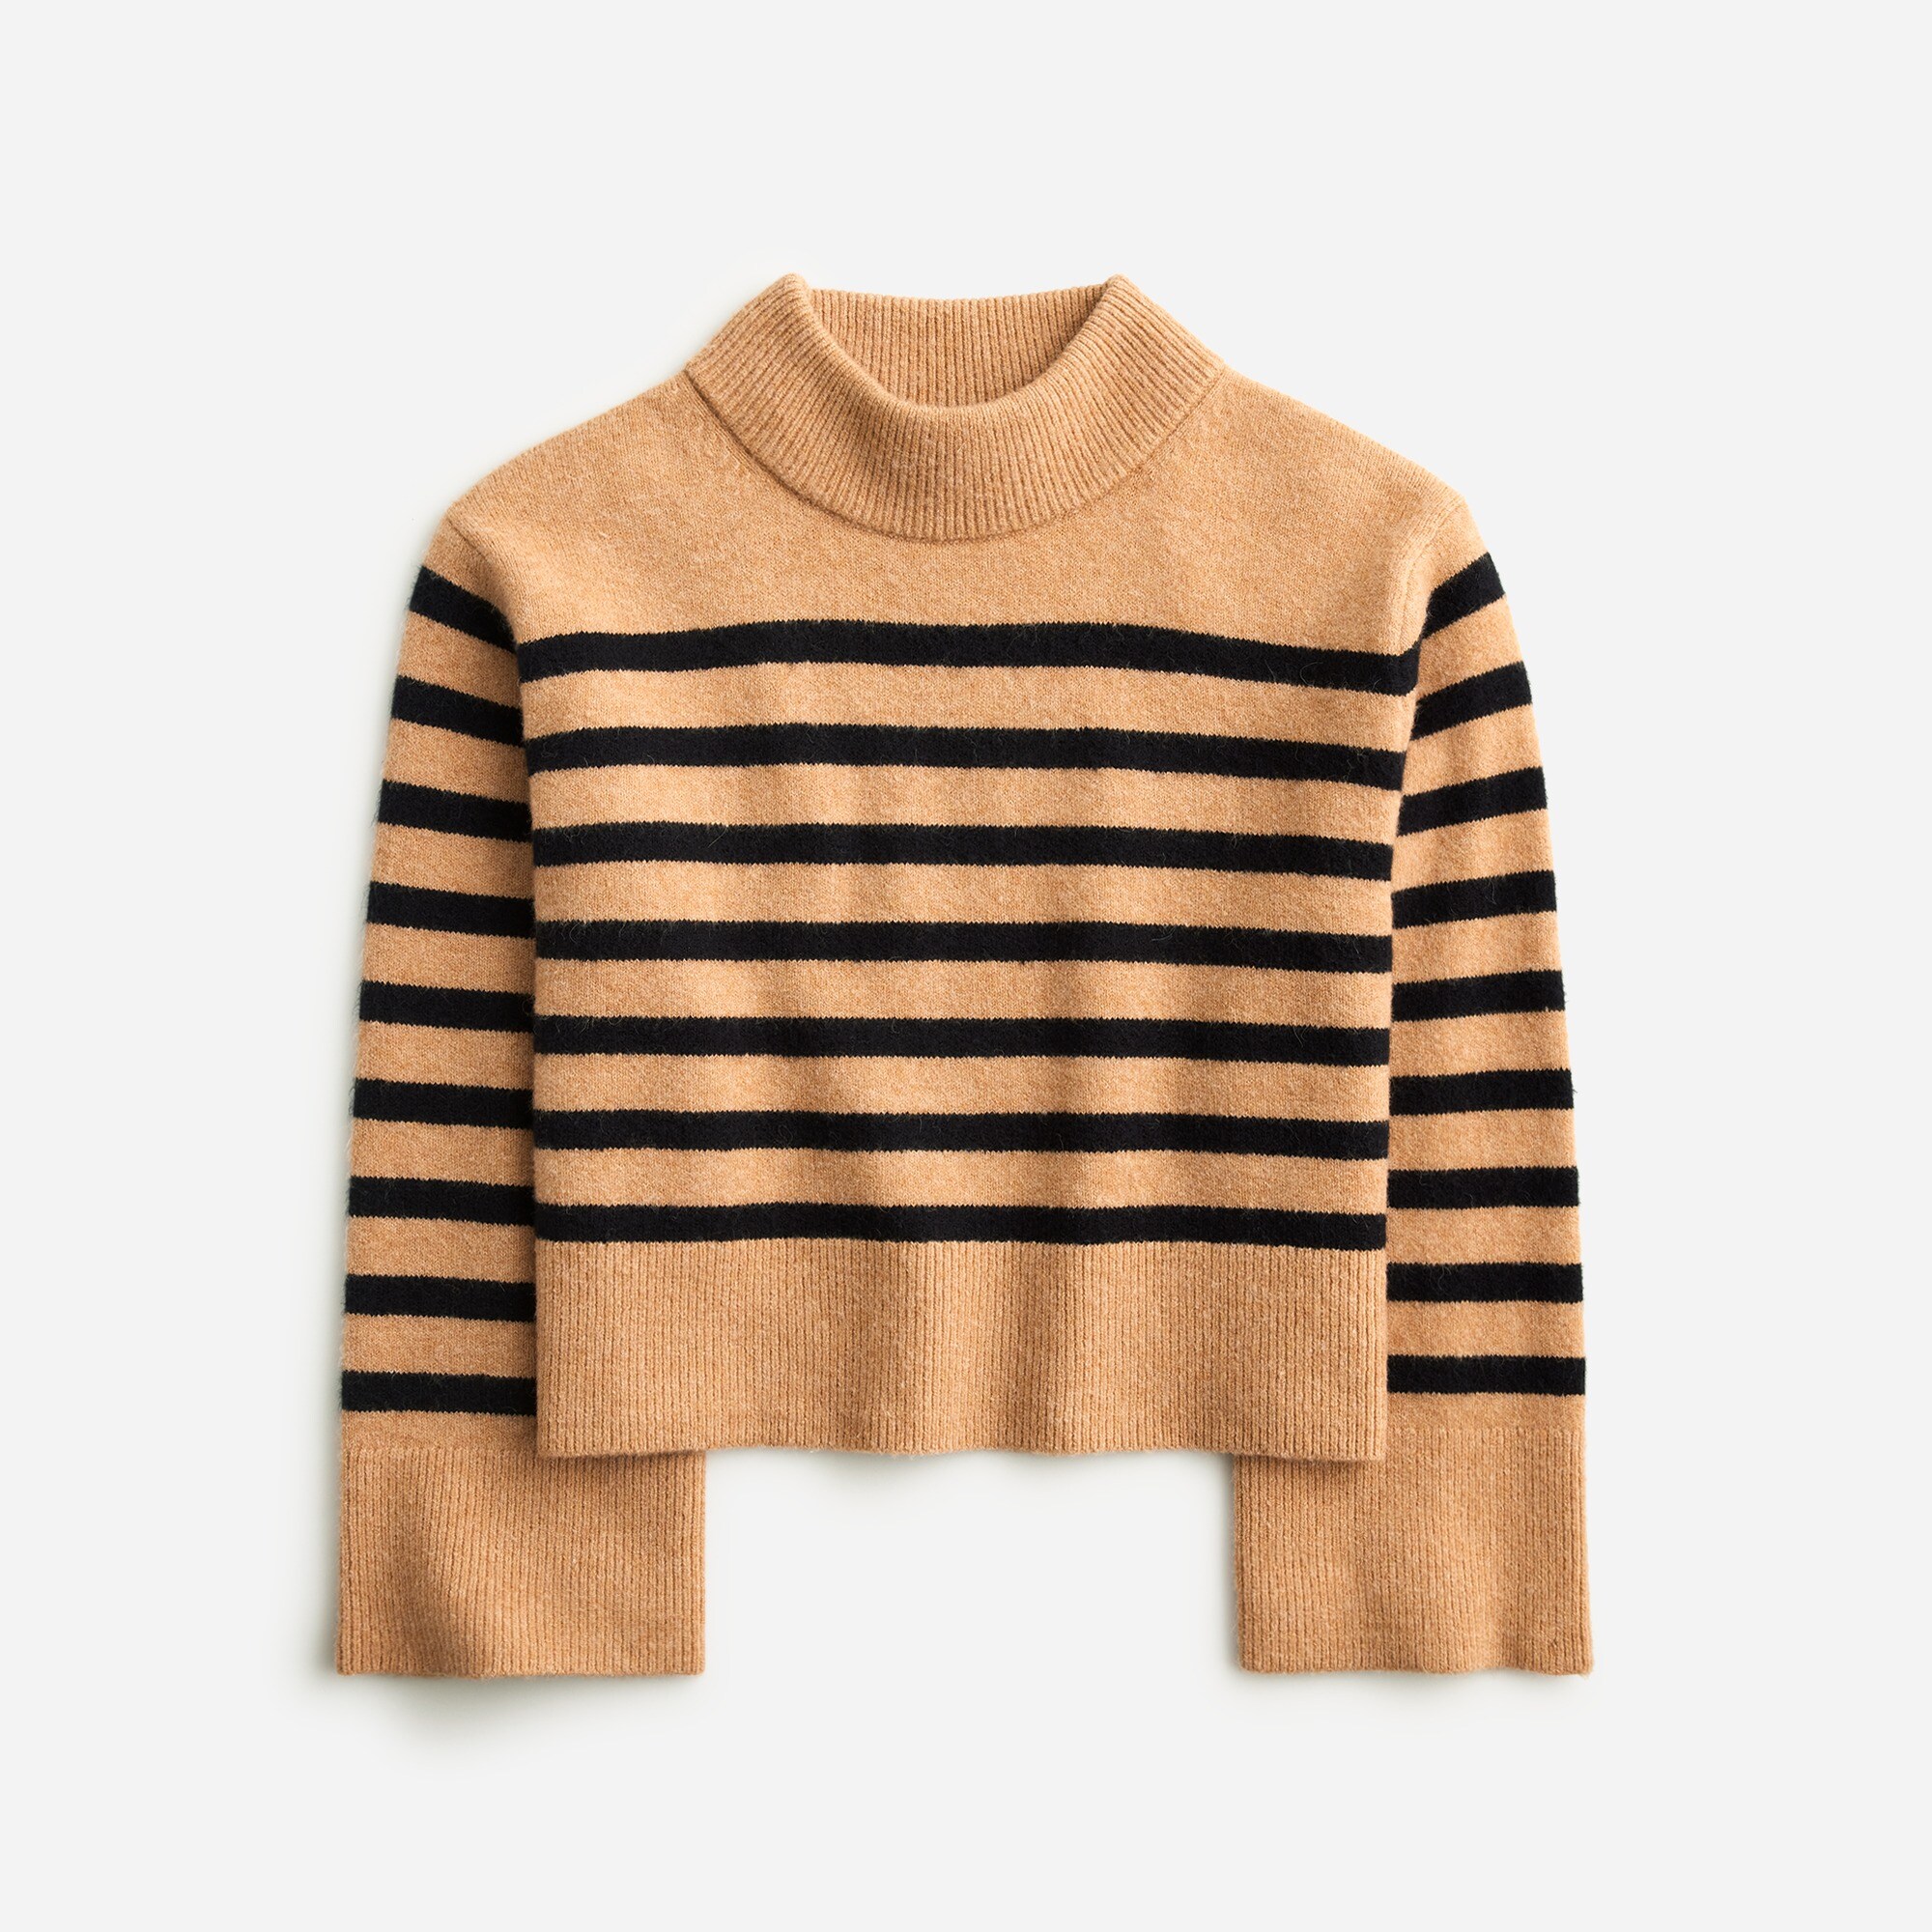  Chunky crewneck sweater in Supersoft yarn